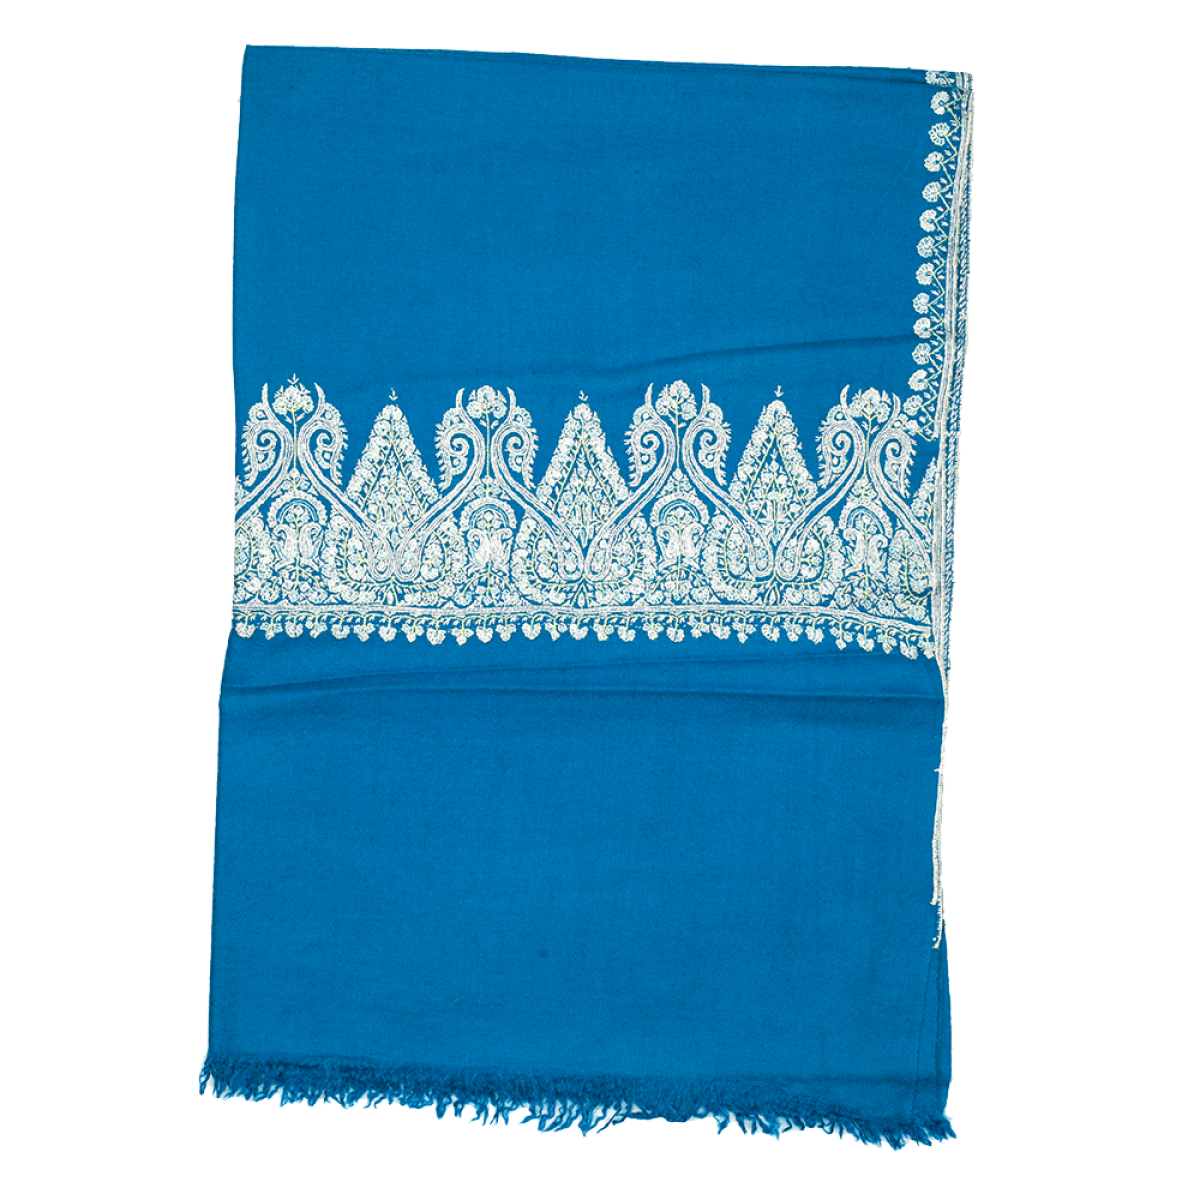 Embroidered Pashmina Stole - Royal Blue & White